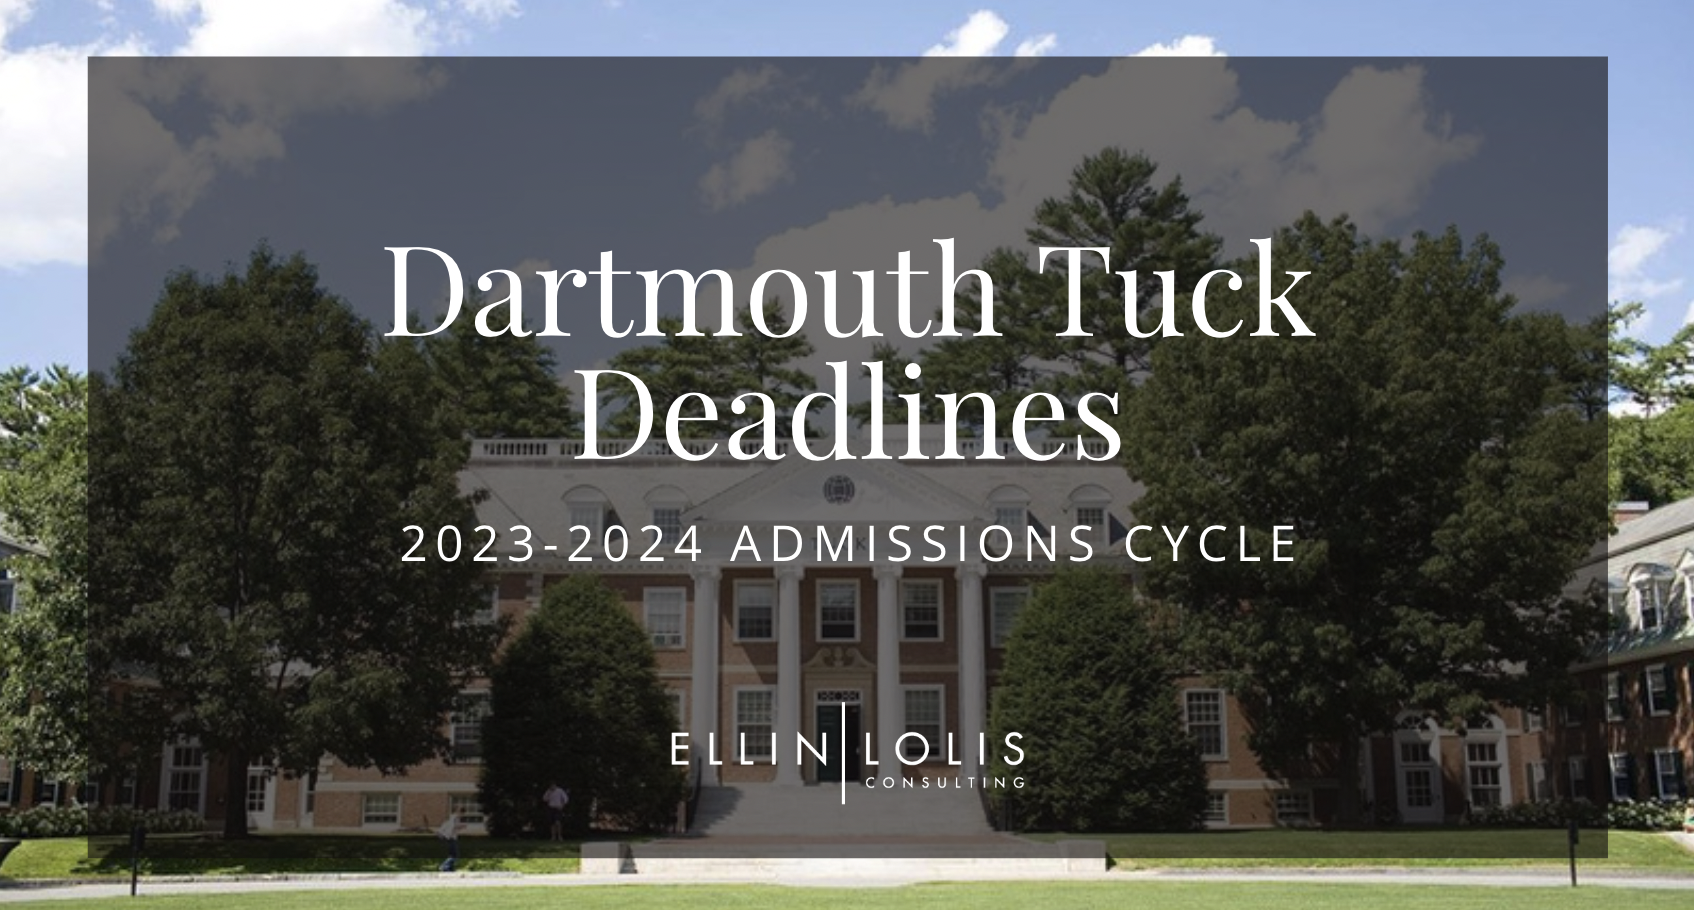 Dartmouth Tuck MBA Deadlines for 2023-2024